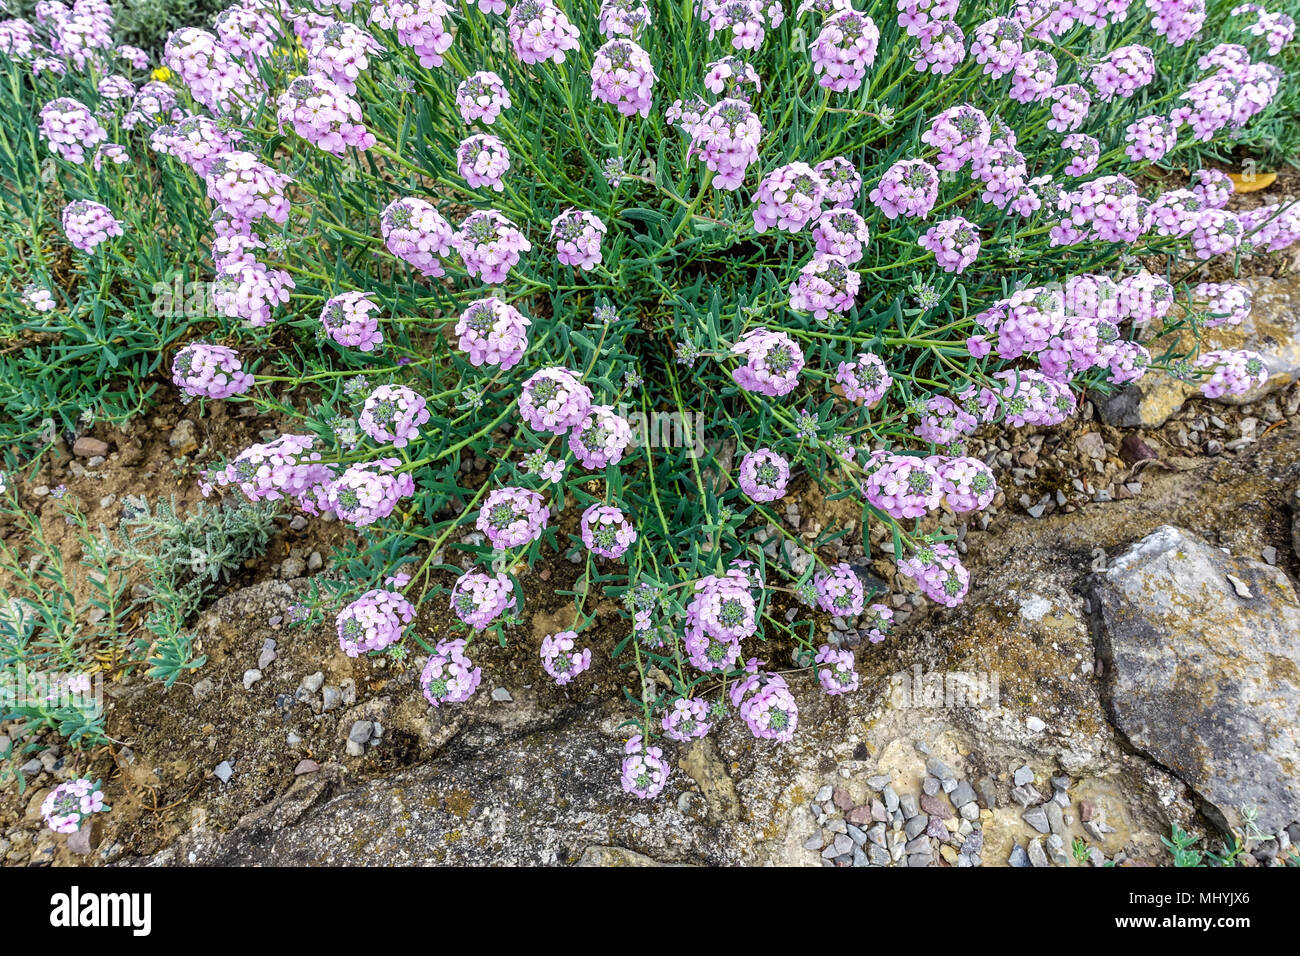 Aethionema schistosum. Fragrant Persian Stonecress or Turkish stonecress alpine plants rockery stone Stock Photo